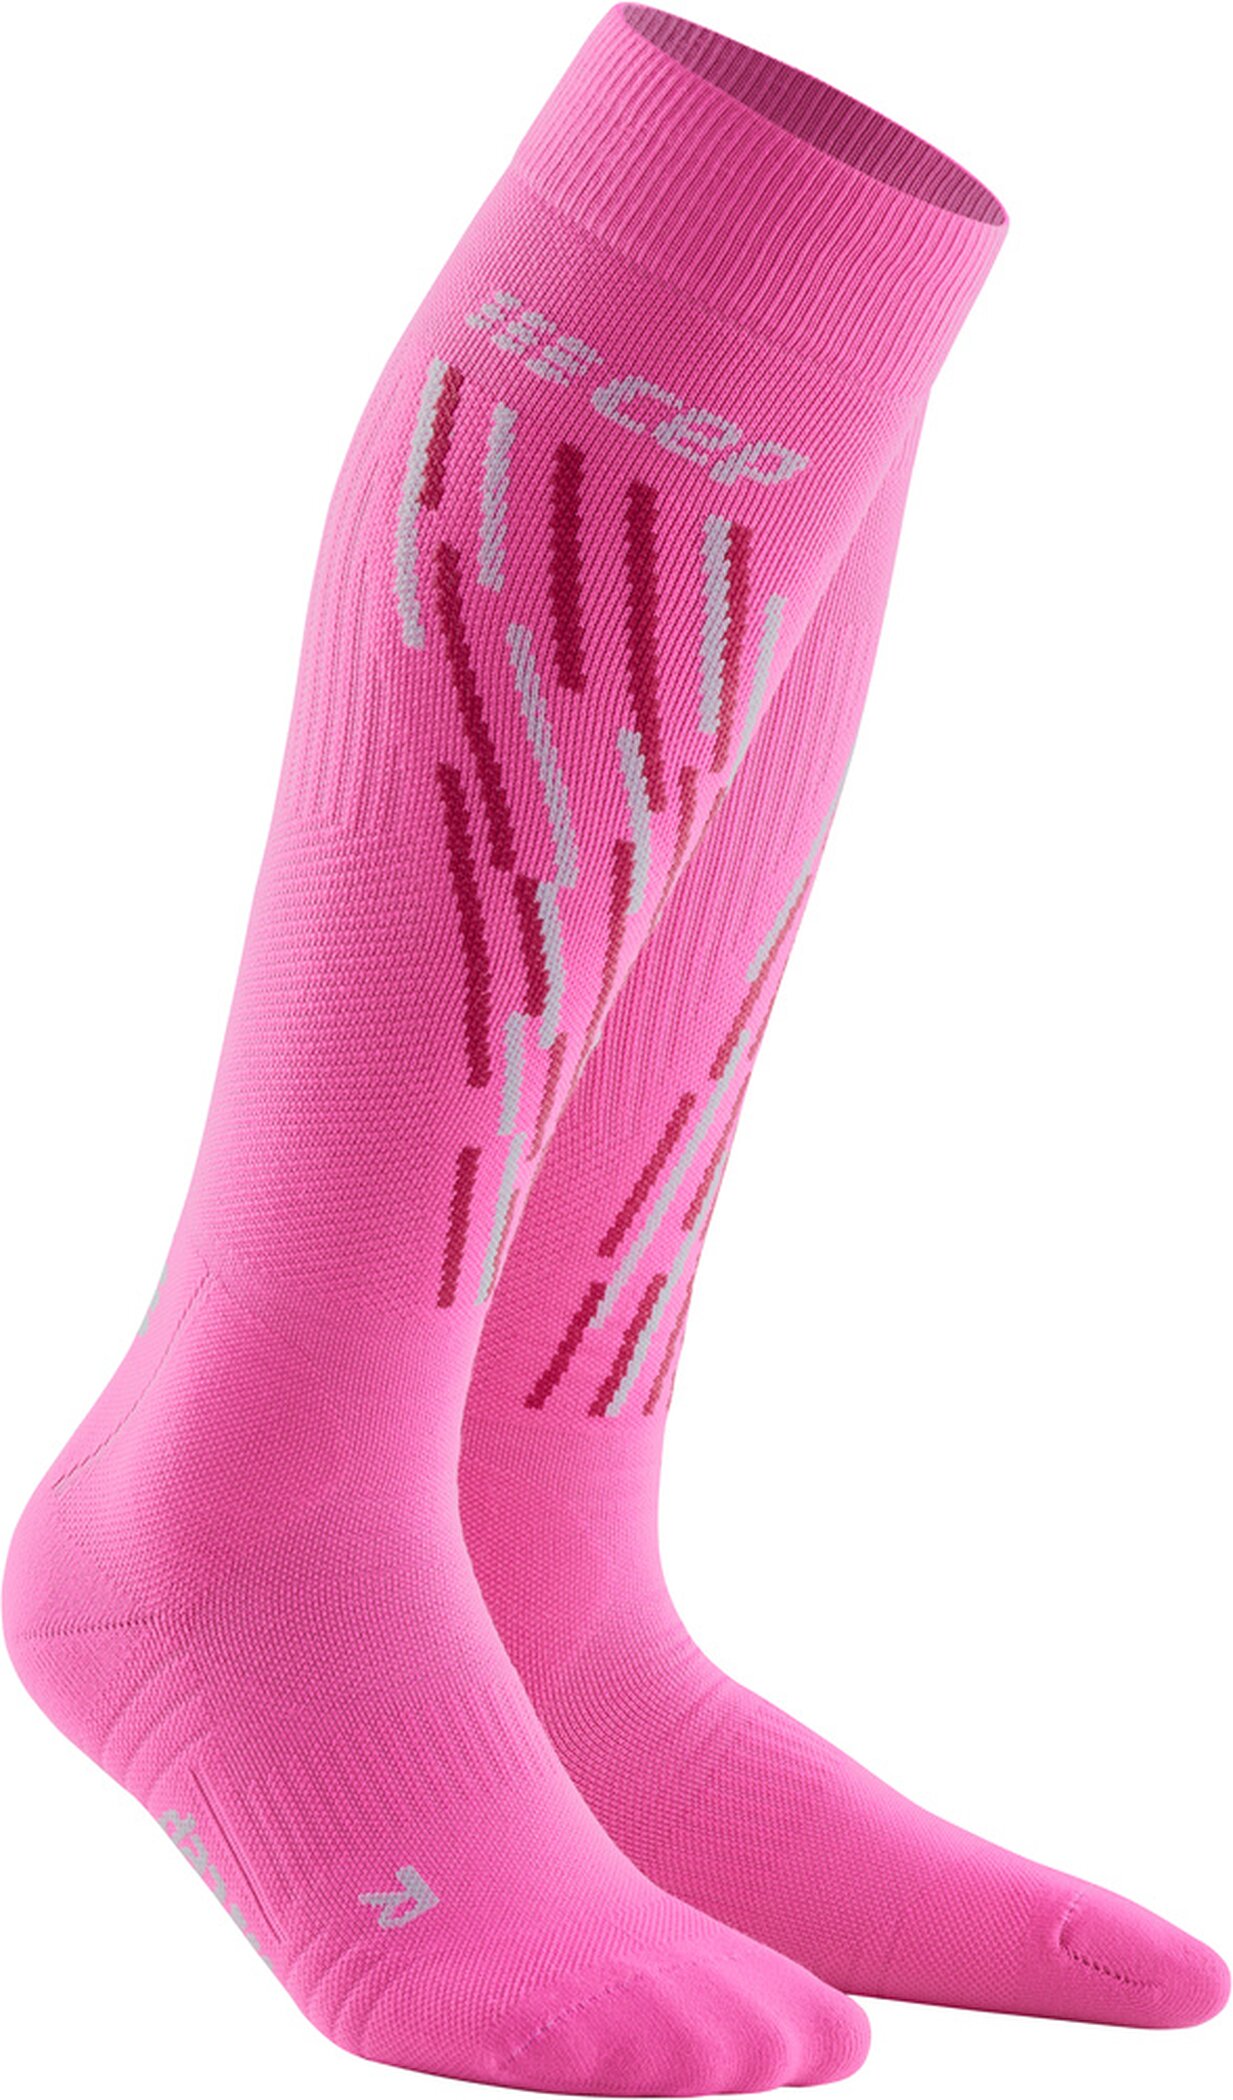 CEP ski thermo socks*, women